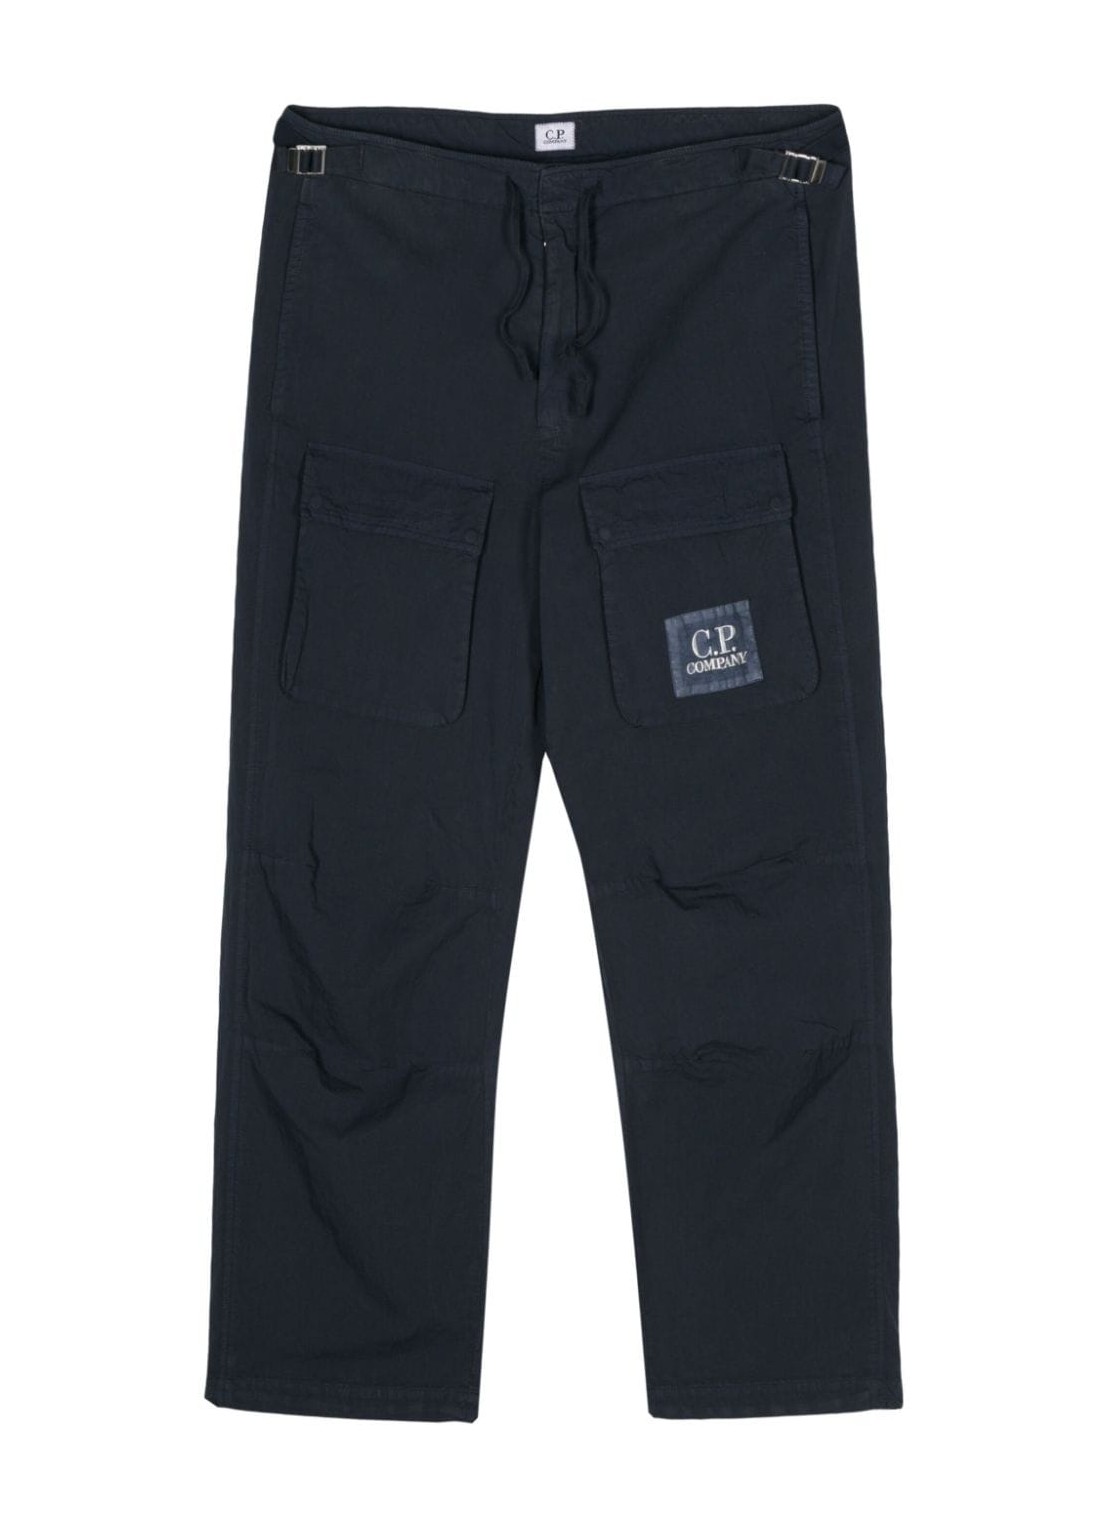 Pantalon c.p.company pant  man50 fili loose pants - 16cmpa135a005533g 886 talla 46
 